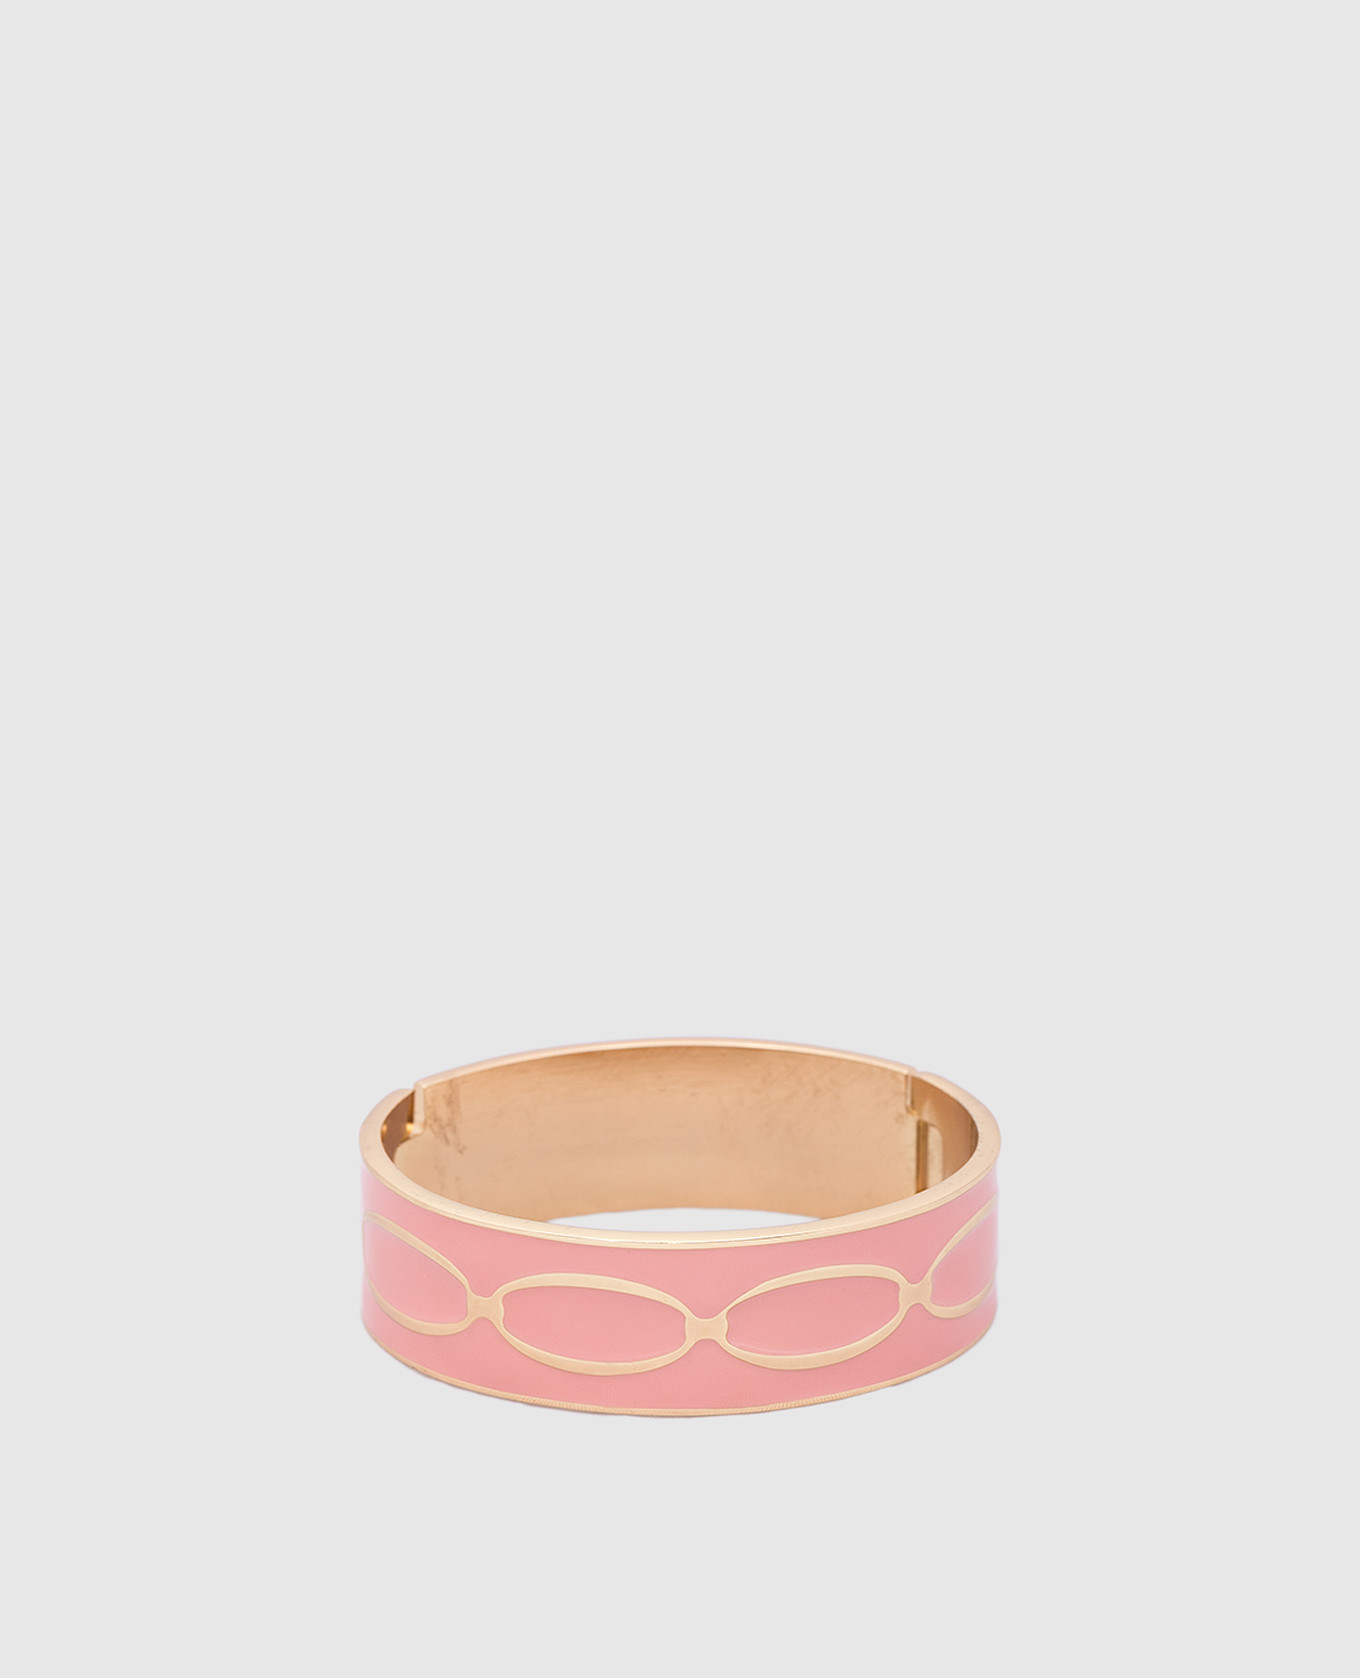 Pink Knot bracelet with 24k gold plating